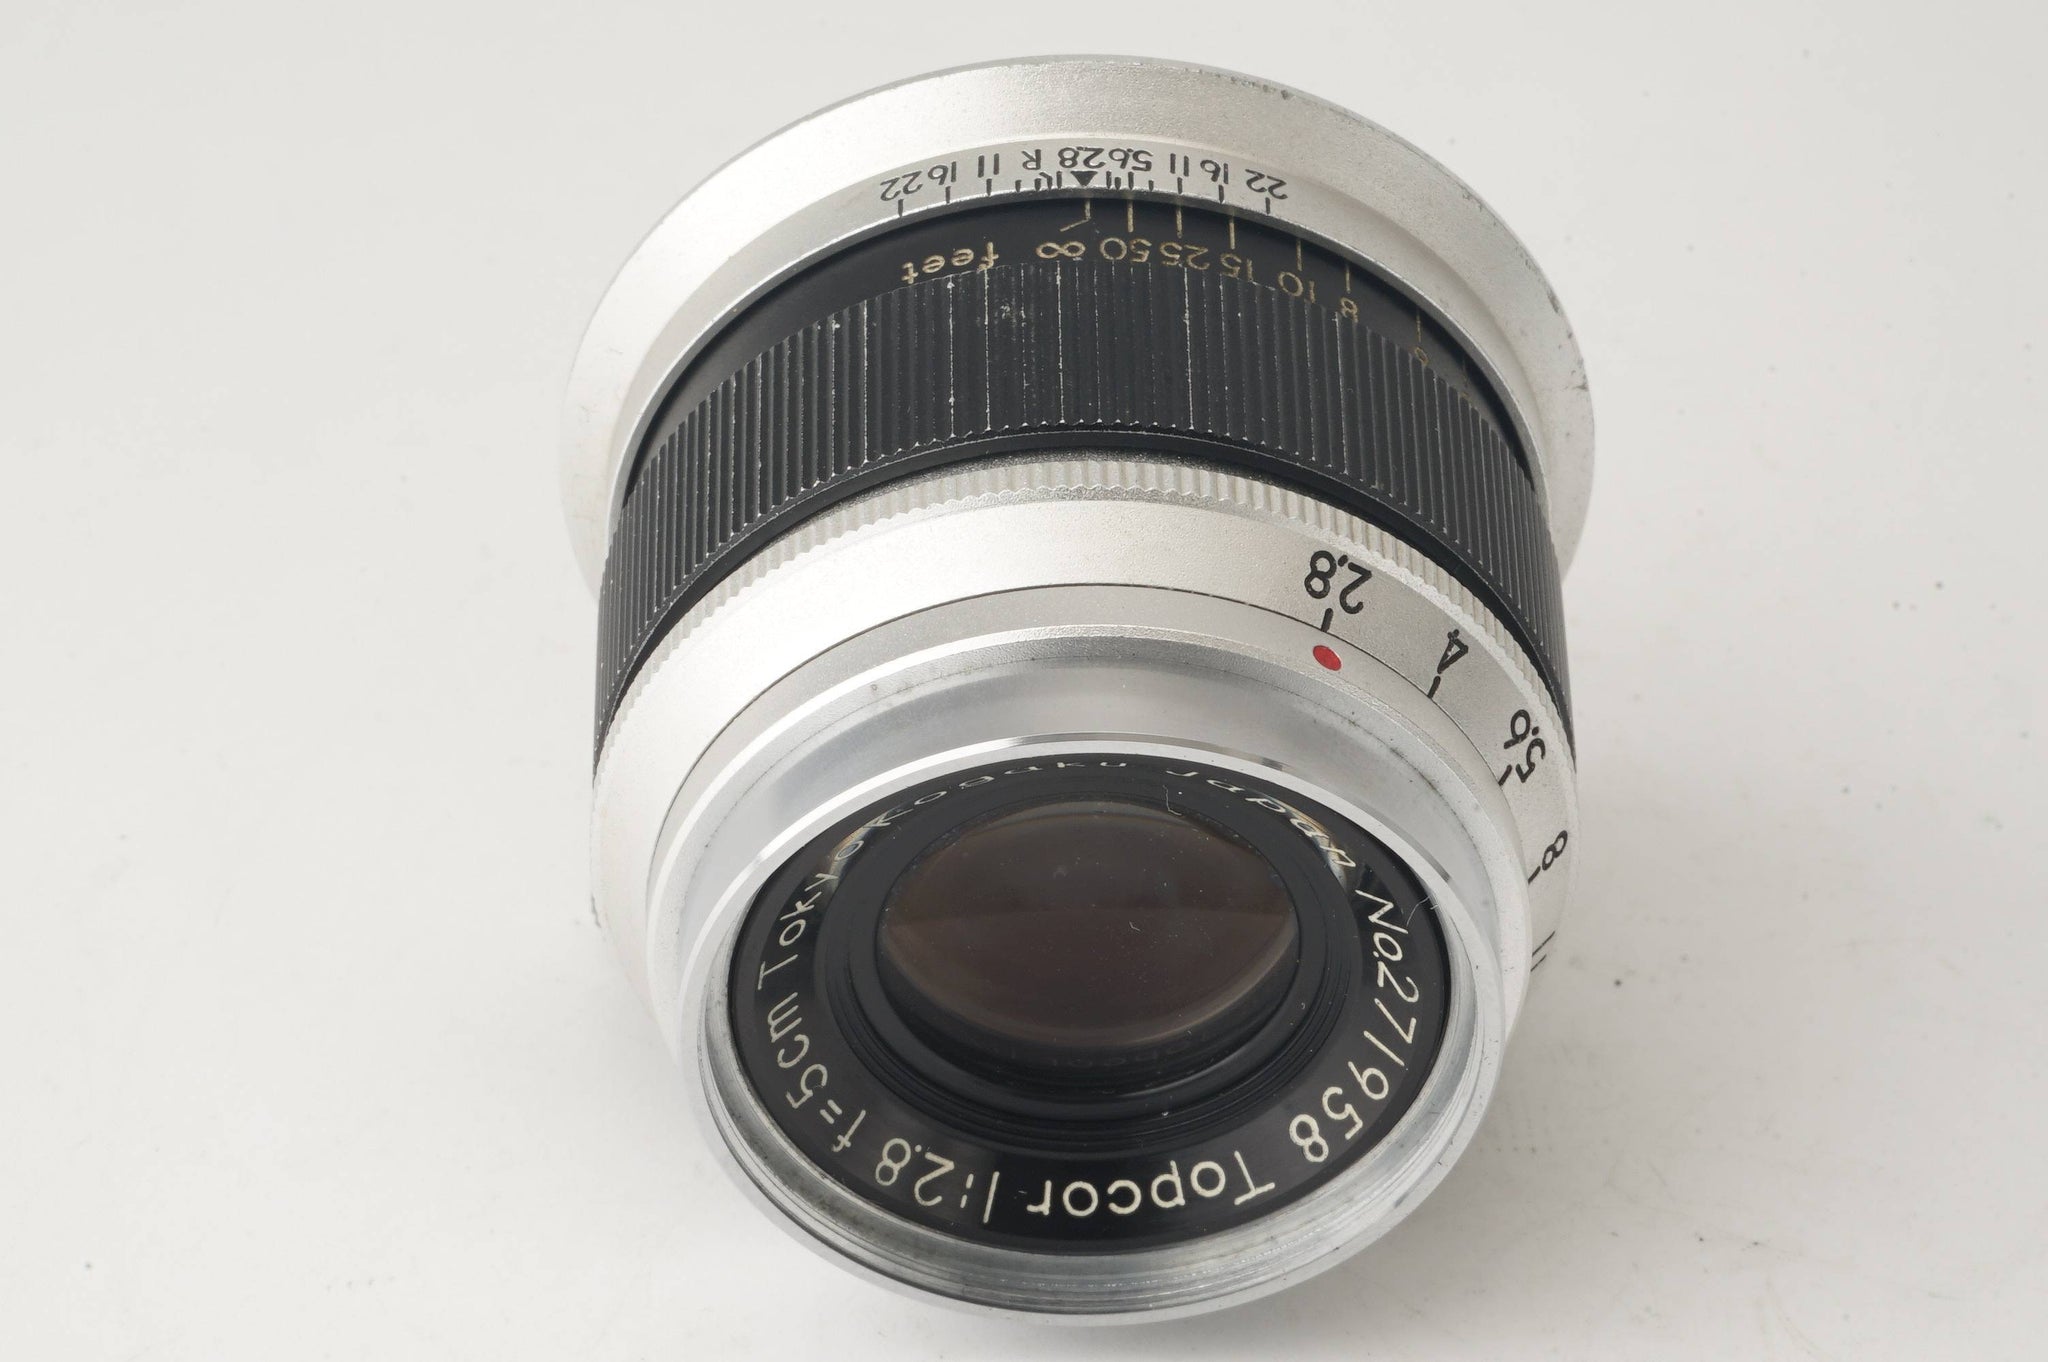 Topcor-S 5cm f2 トプコールS 50mm Tokyo Kogaku Japan 東京光学 Leica 